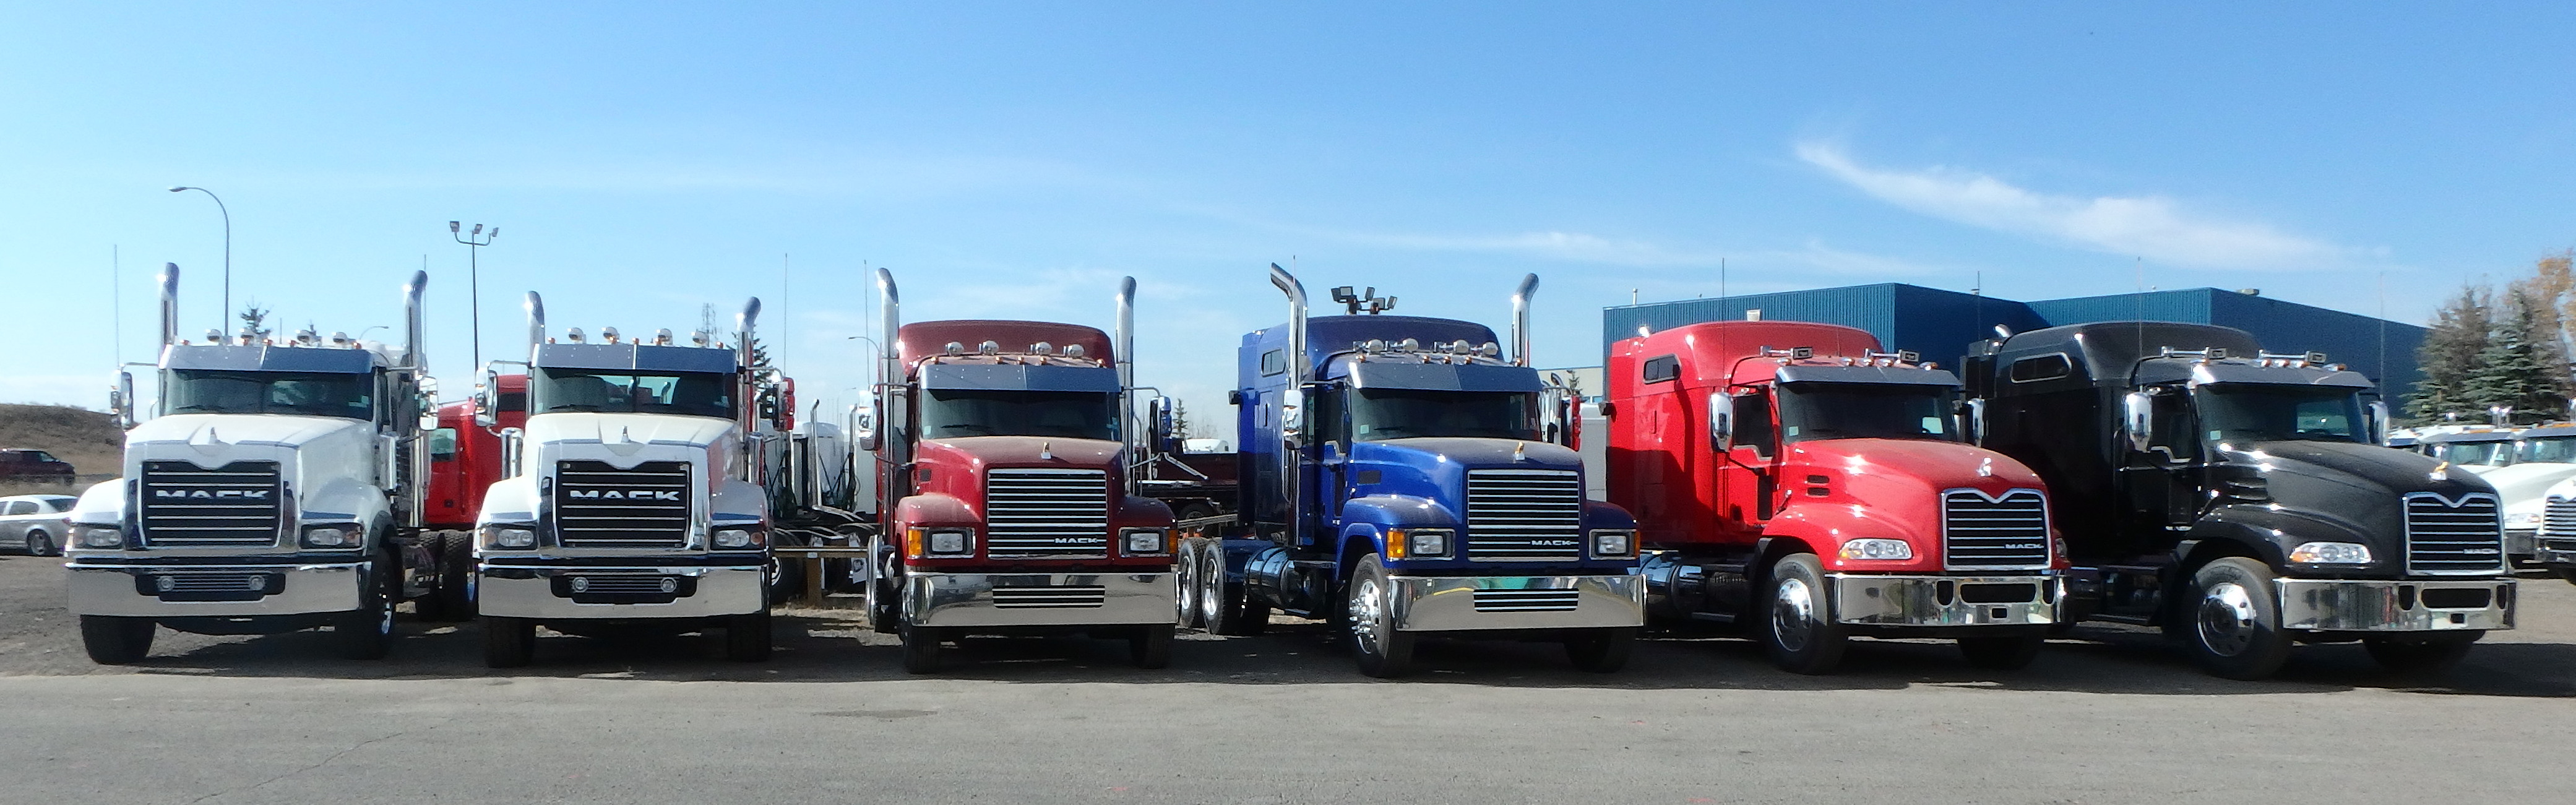 Amazing Mack Trucks Pictures & Backgrounds